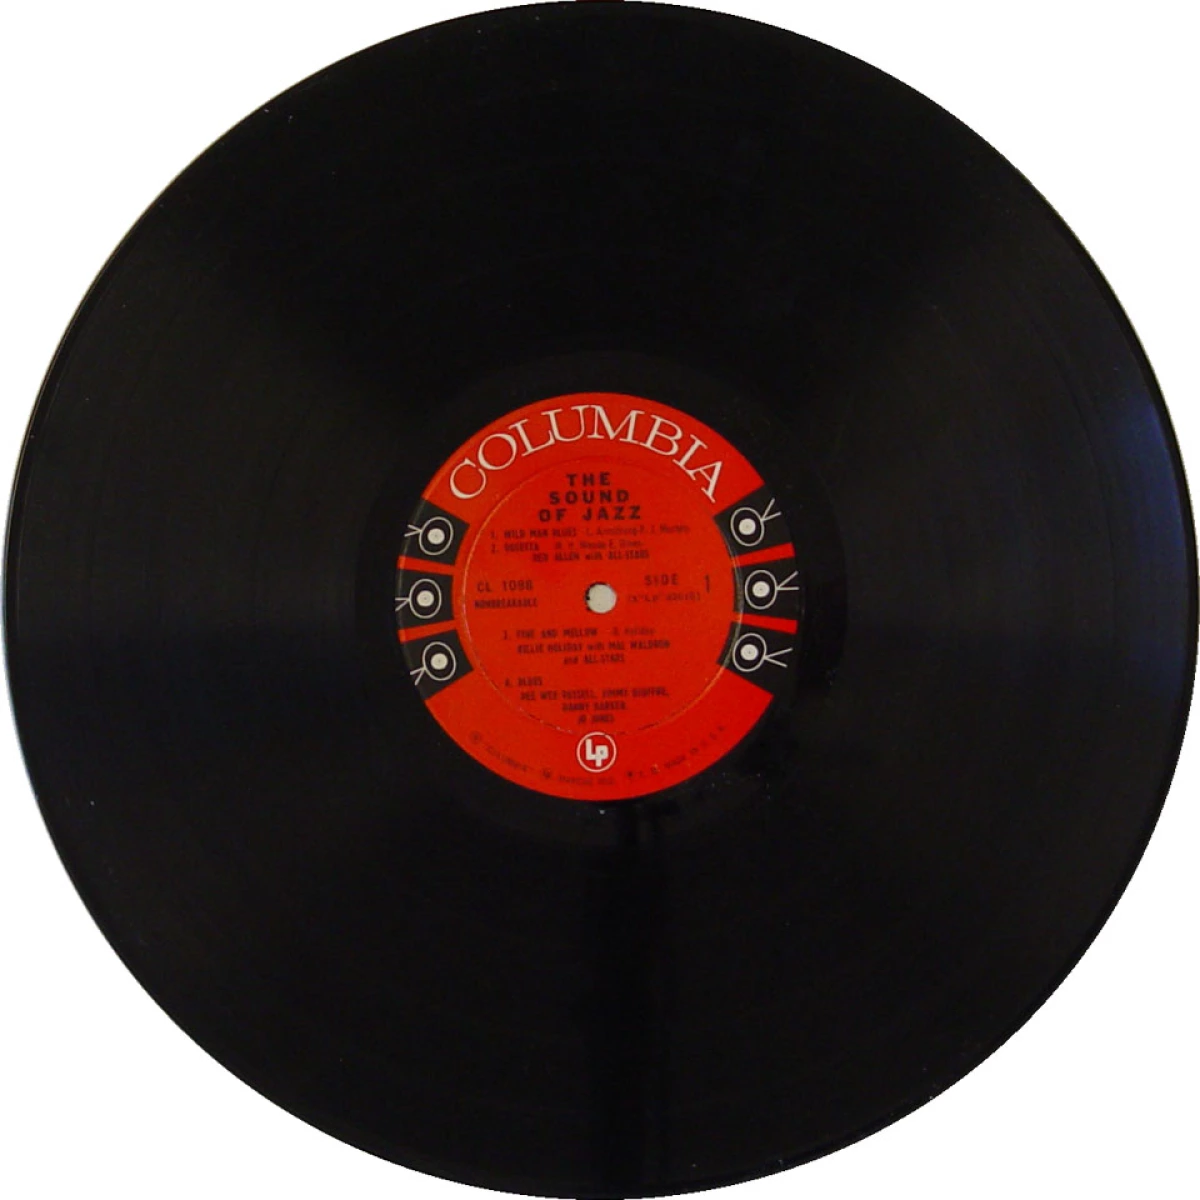 Louis Armstrong Vinyl 12, 1958 at Wolfgang's